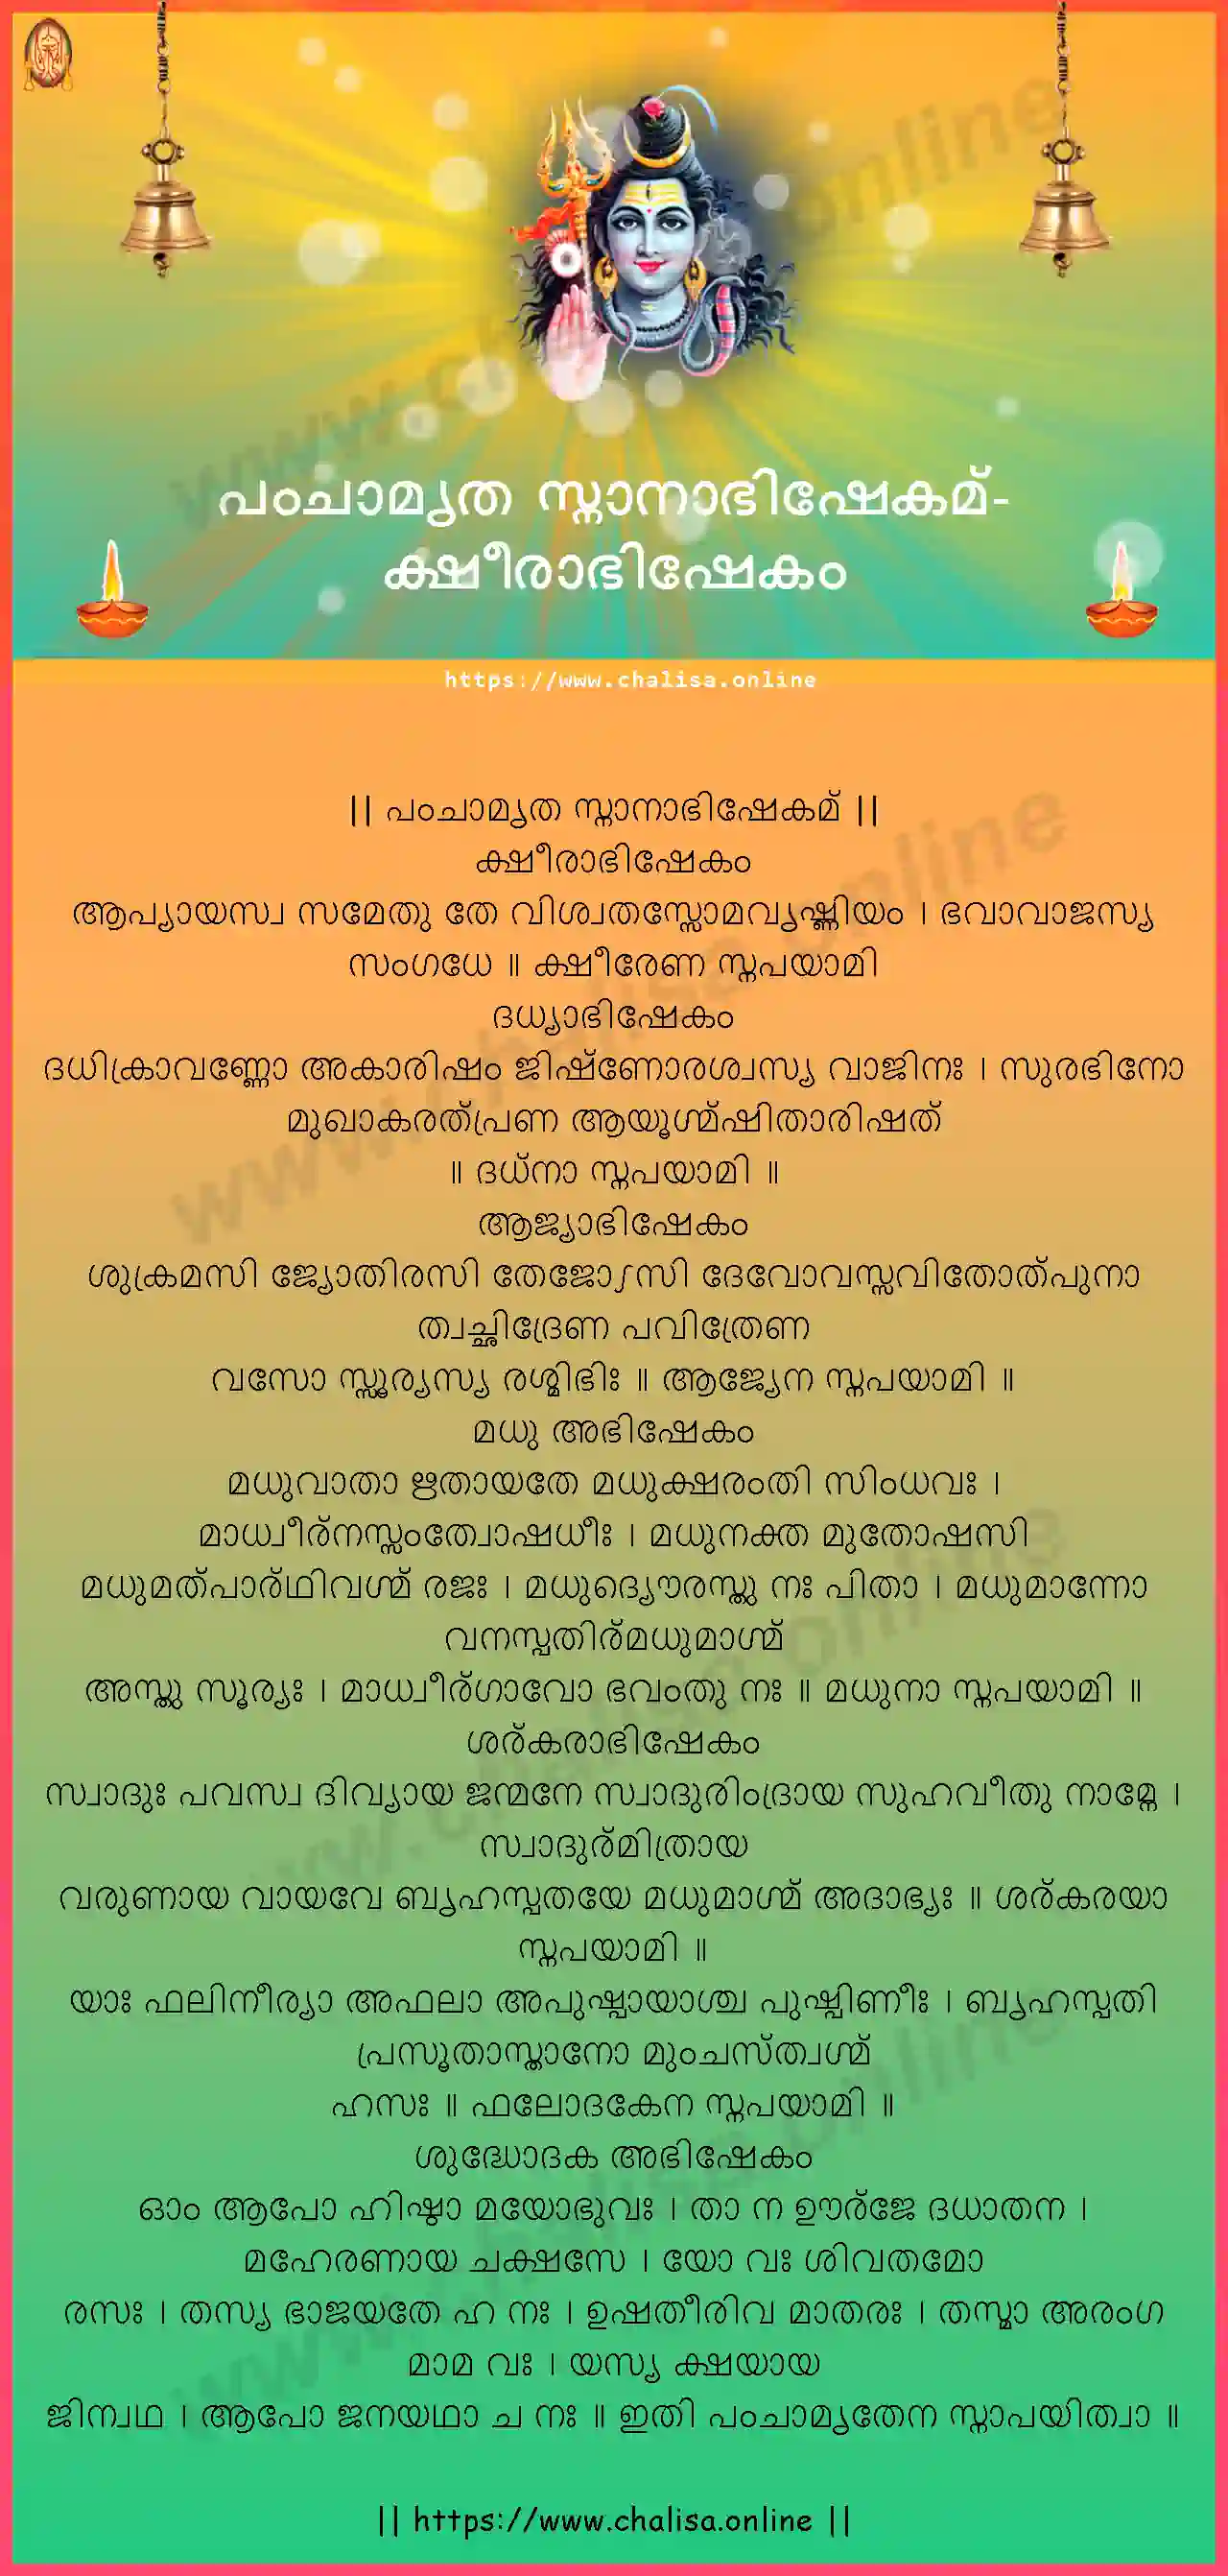 ksirabhisekam-panchamruta-snanam-malayalam-malayalam-lyrics-download